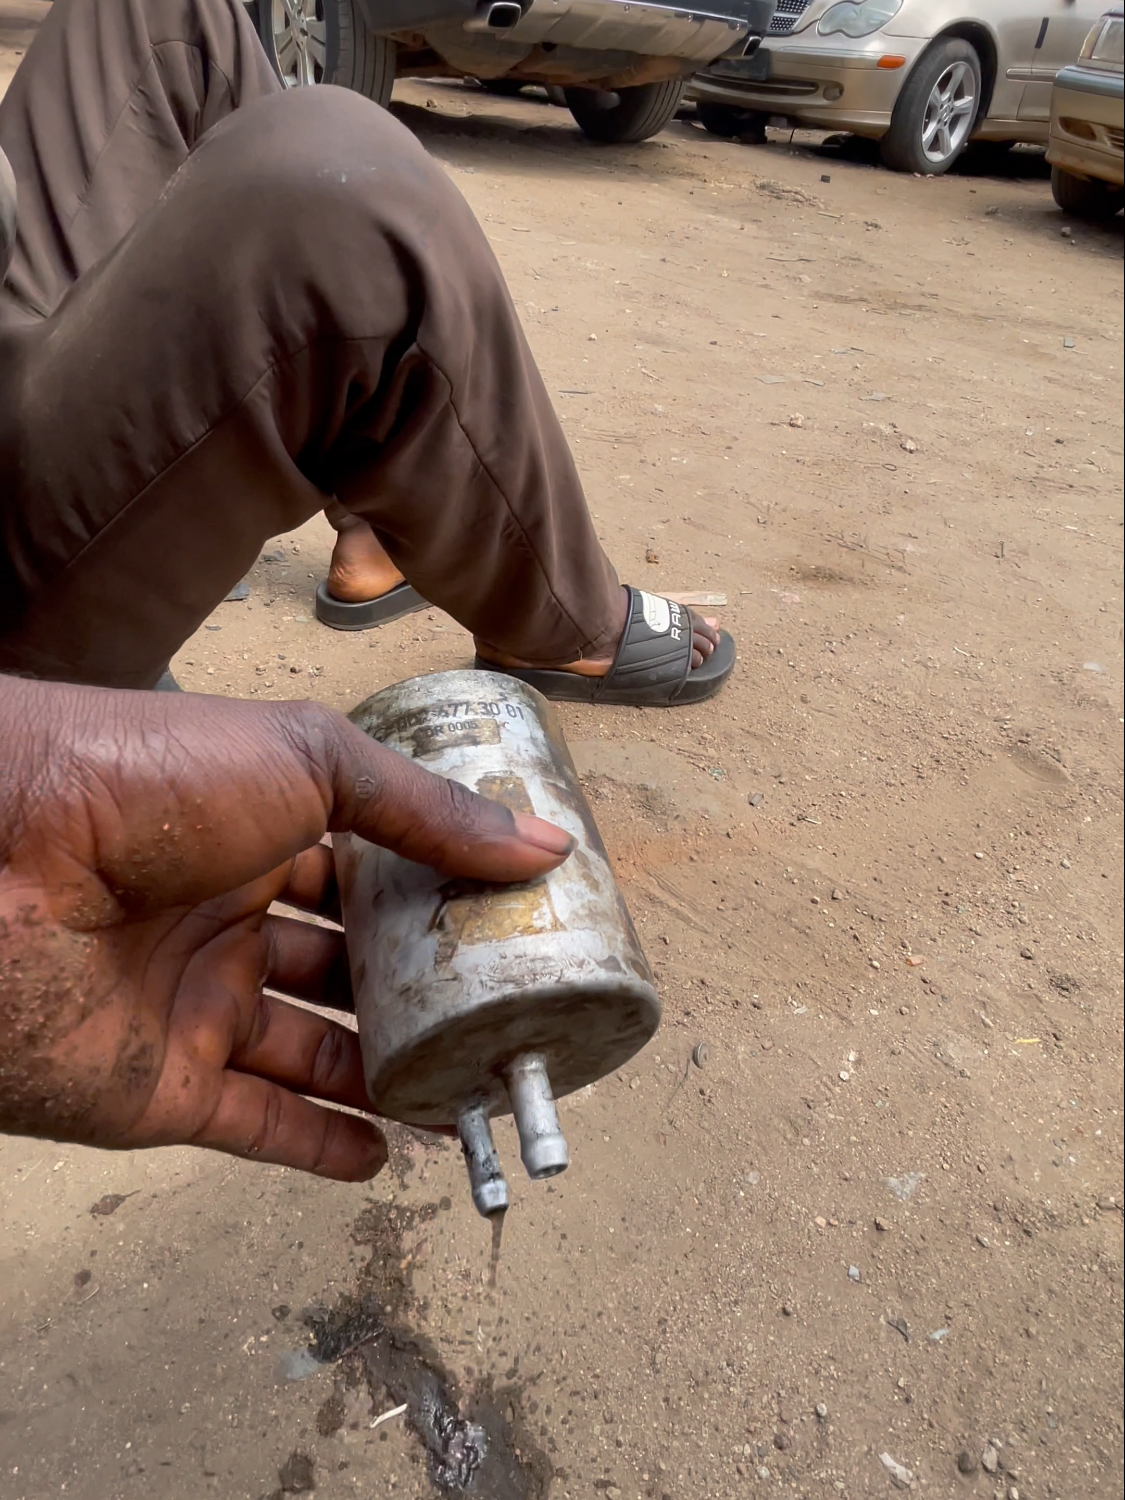 Customer complains of fuel overflow #maxthemechanic #topspeedgermany #mechanics #africa